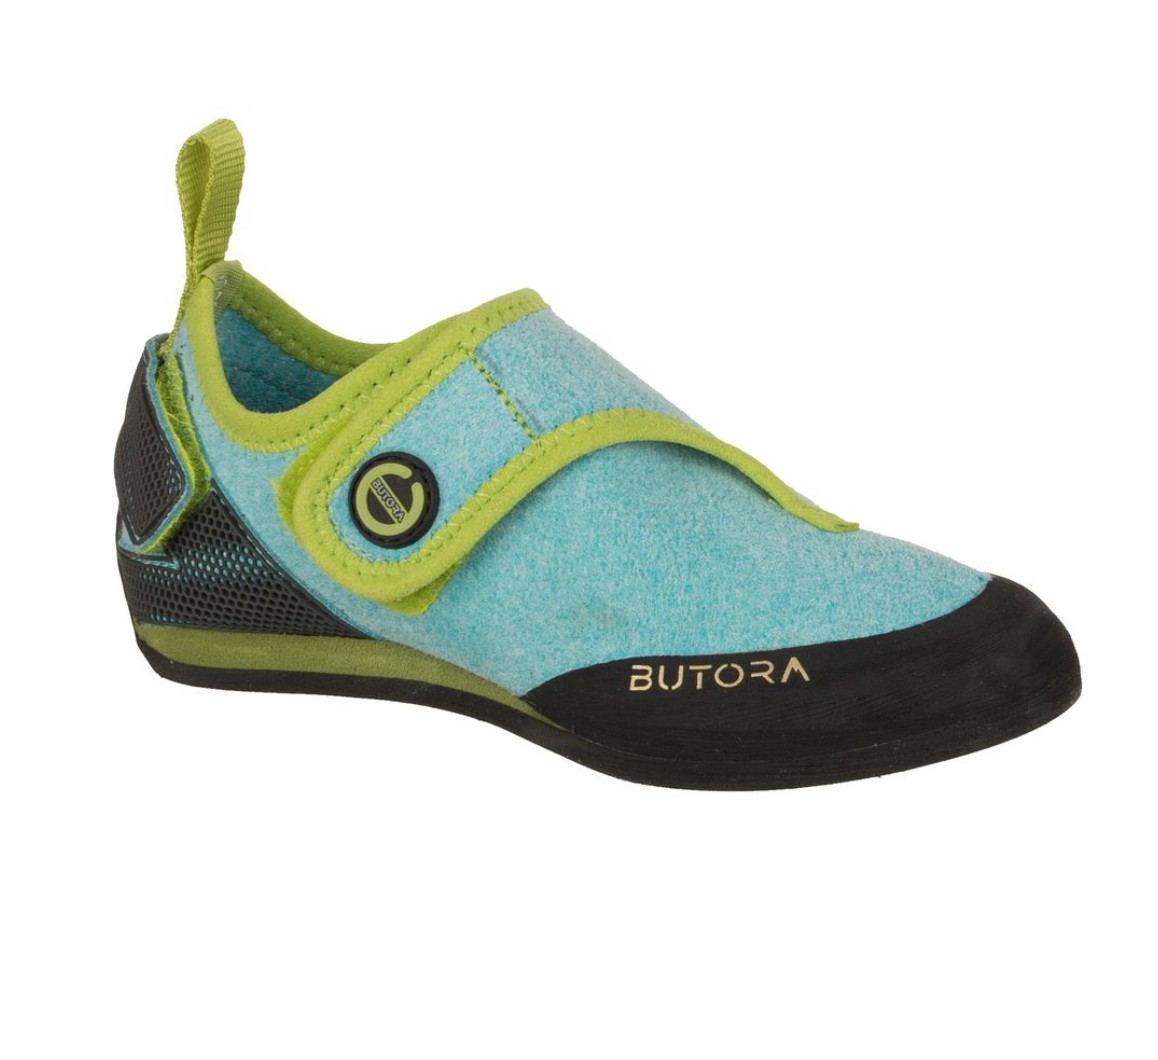 butora brava climbing shoes kid review